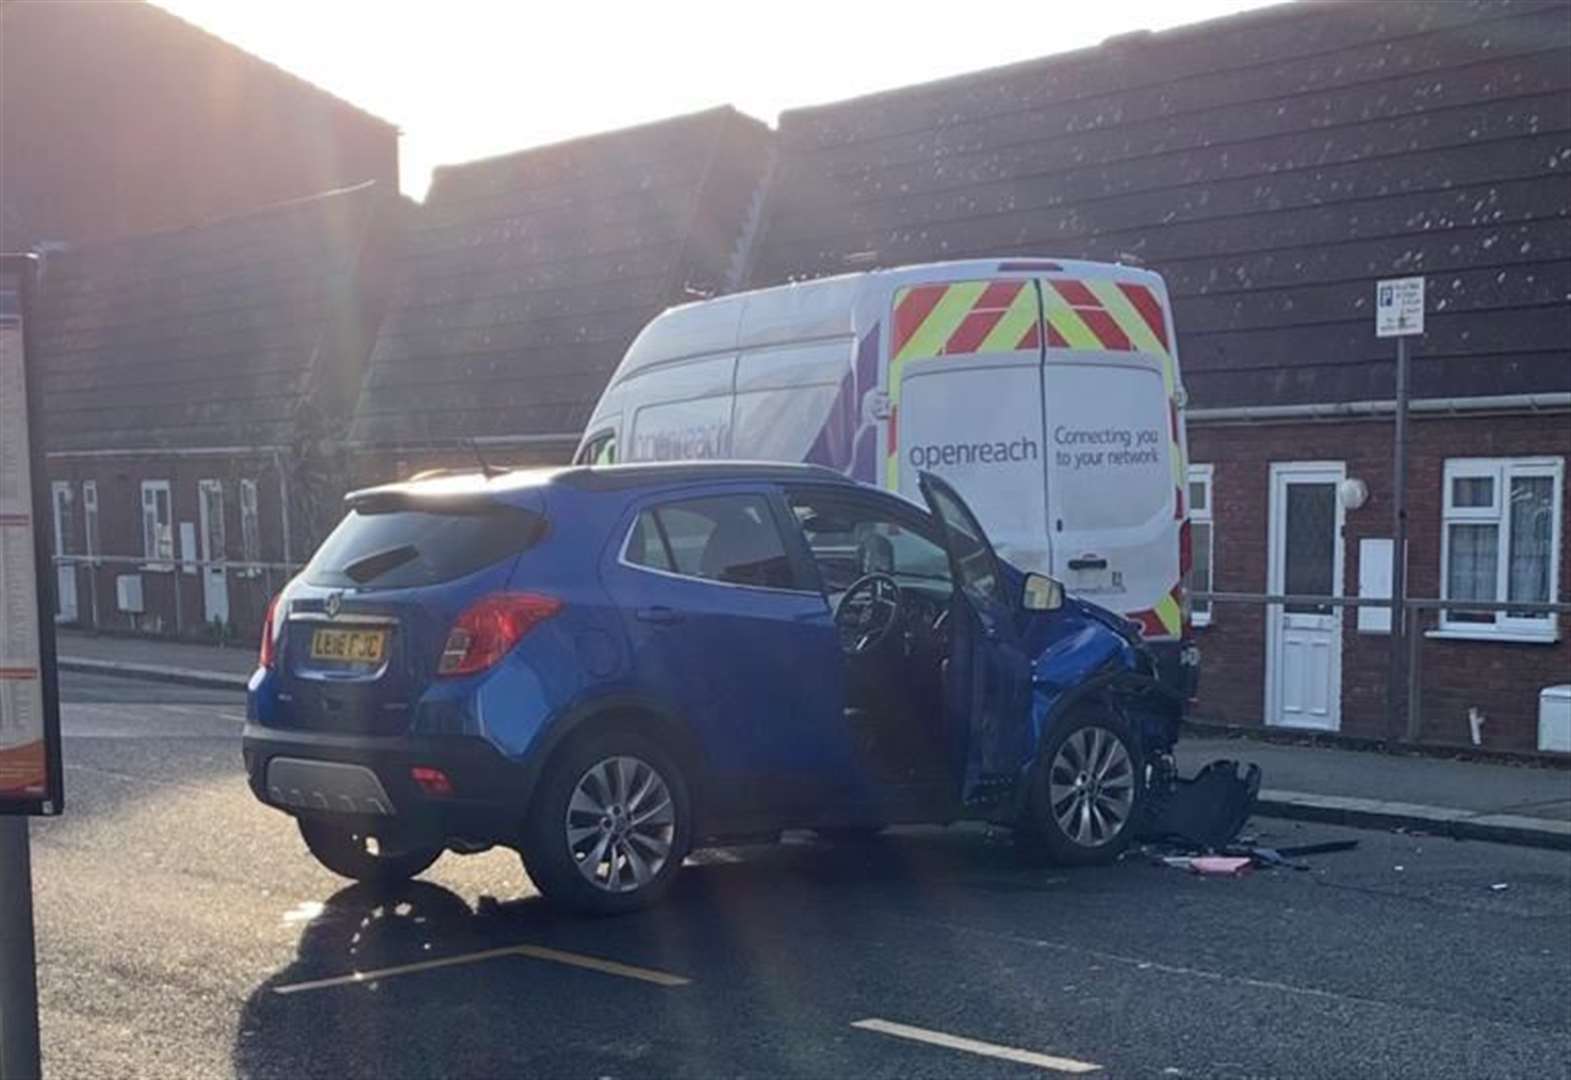 Two people taken to hospital after crash near supermarket 